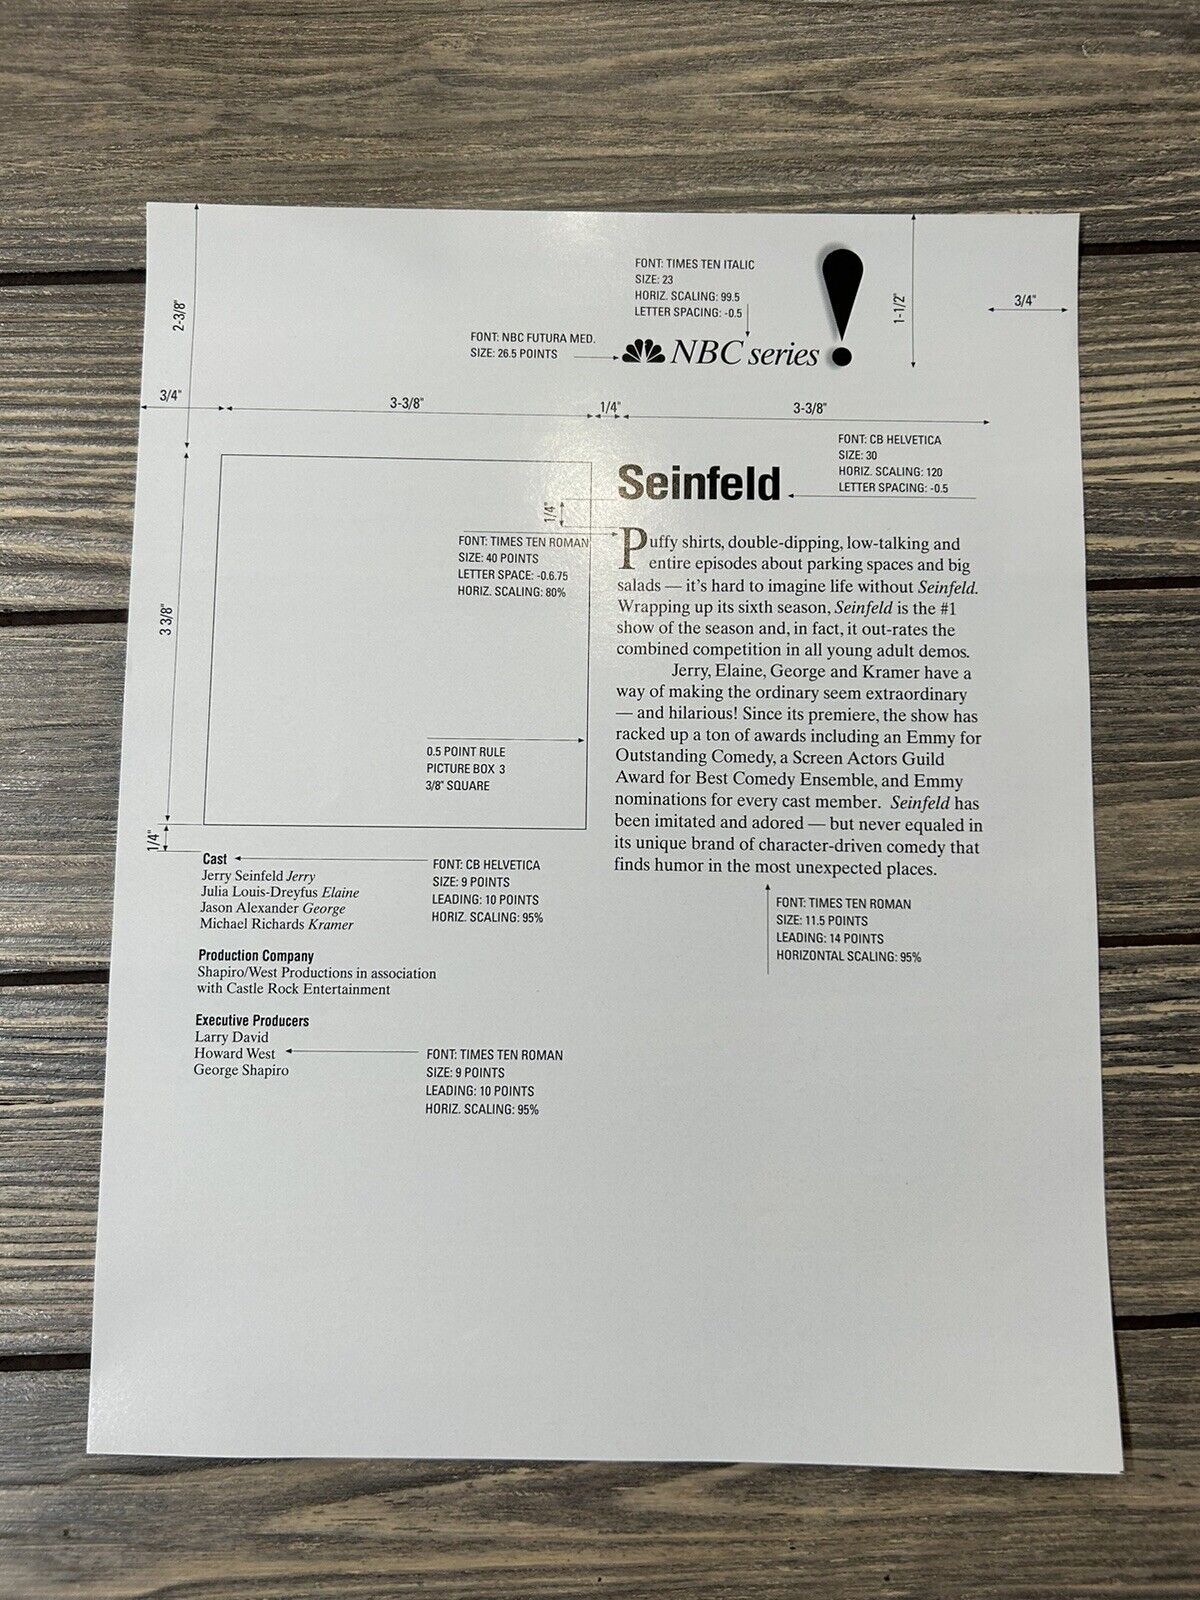 Vintage NBC Series Seinfield Fact Sheet Press Release